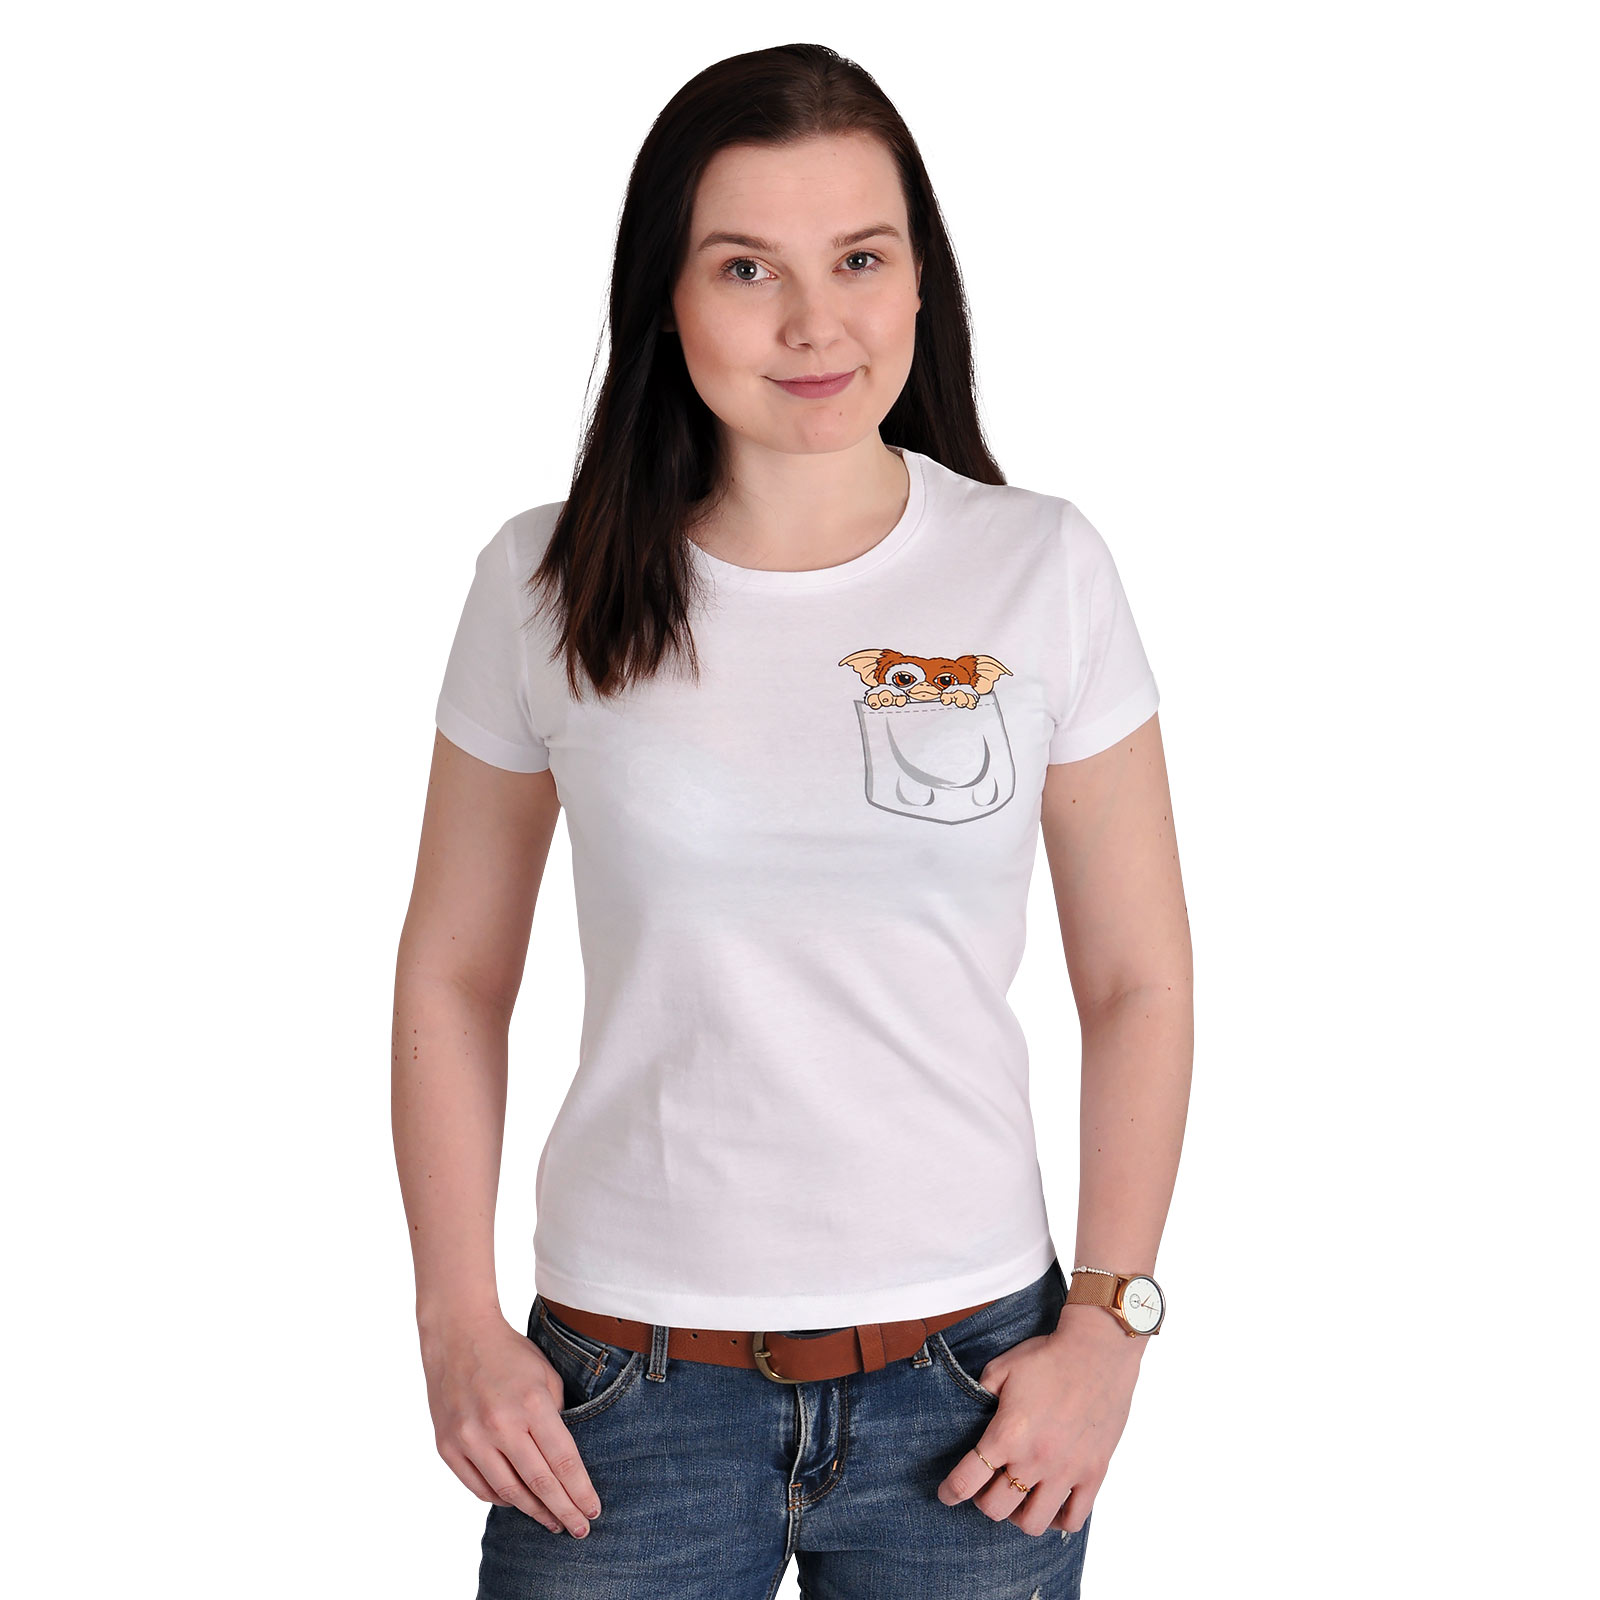 Gremlins - Pocket Gizmo Women's T-Shirt White